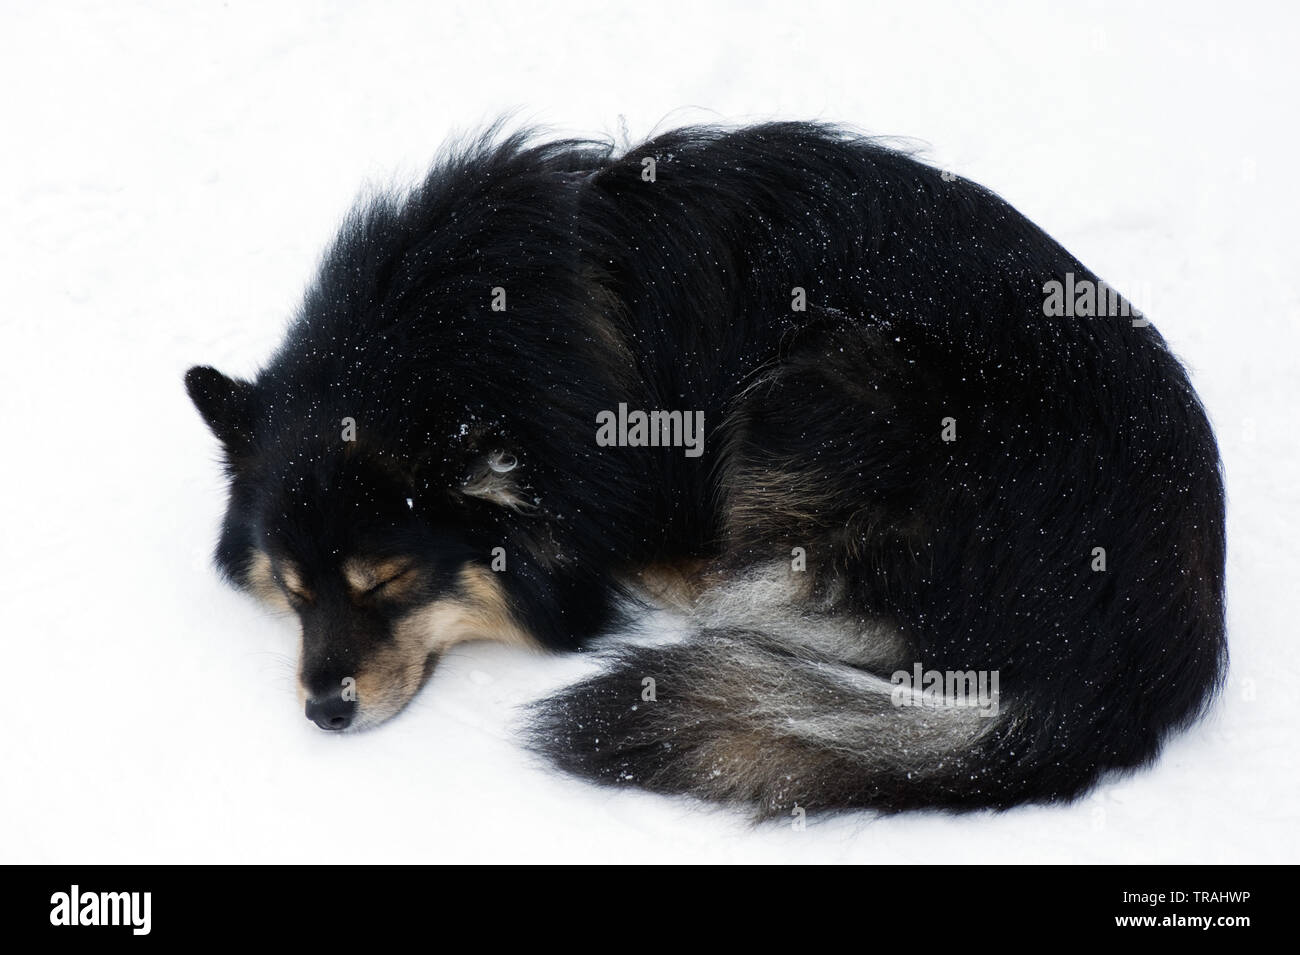 Finnish Lapphund sleeping in snow. Stock Photo